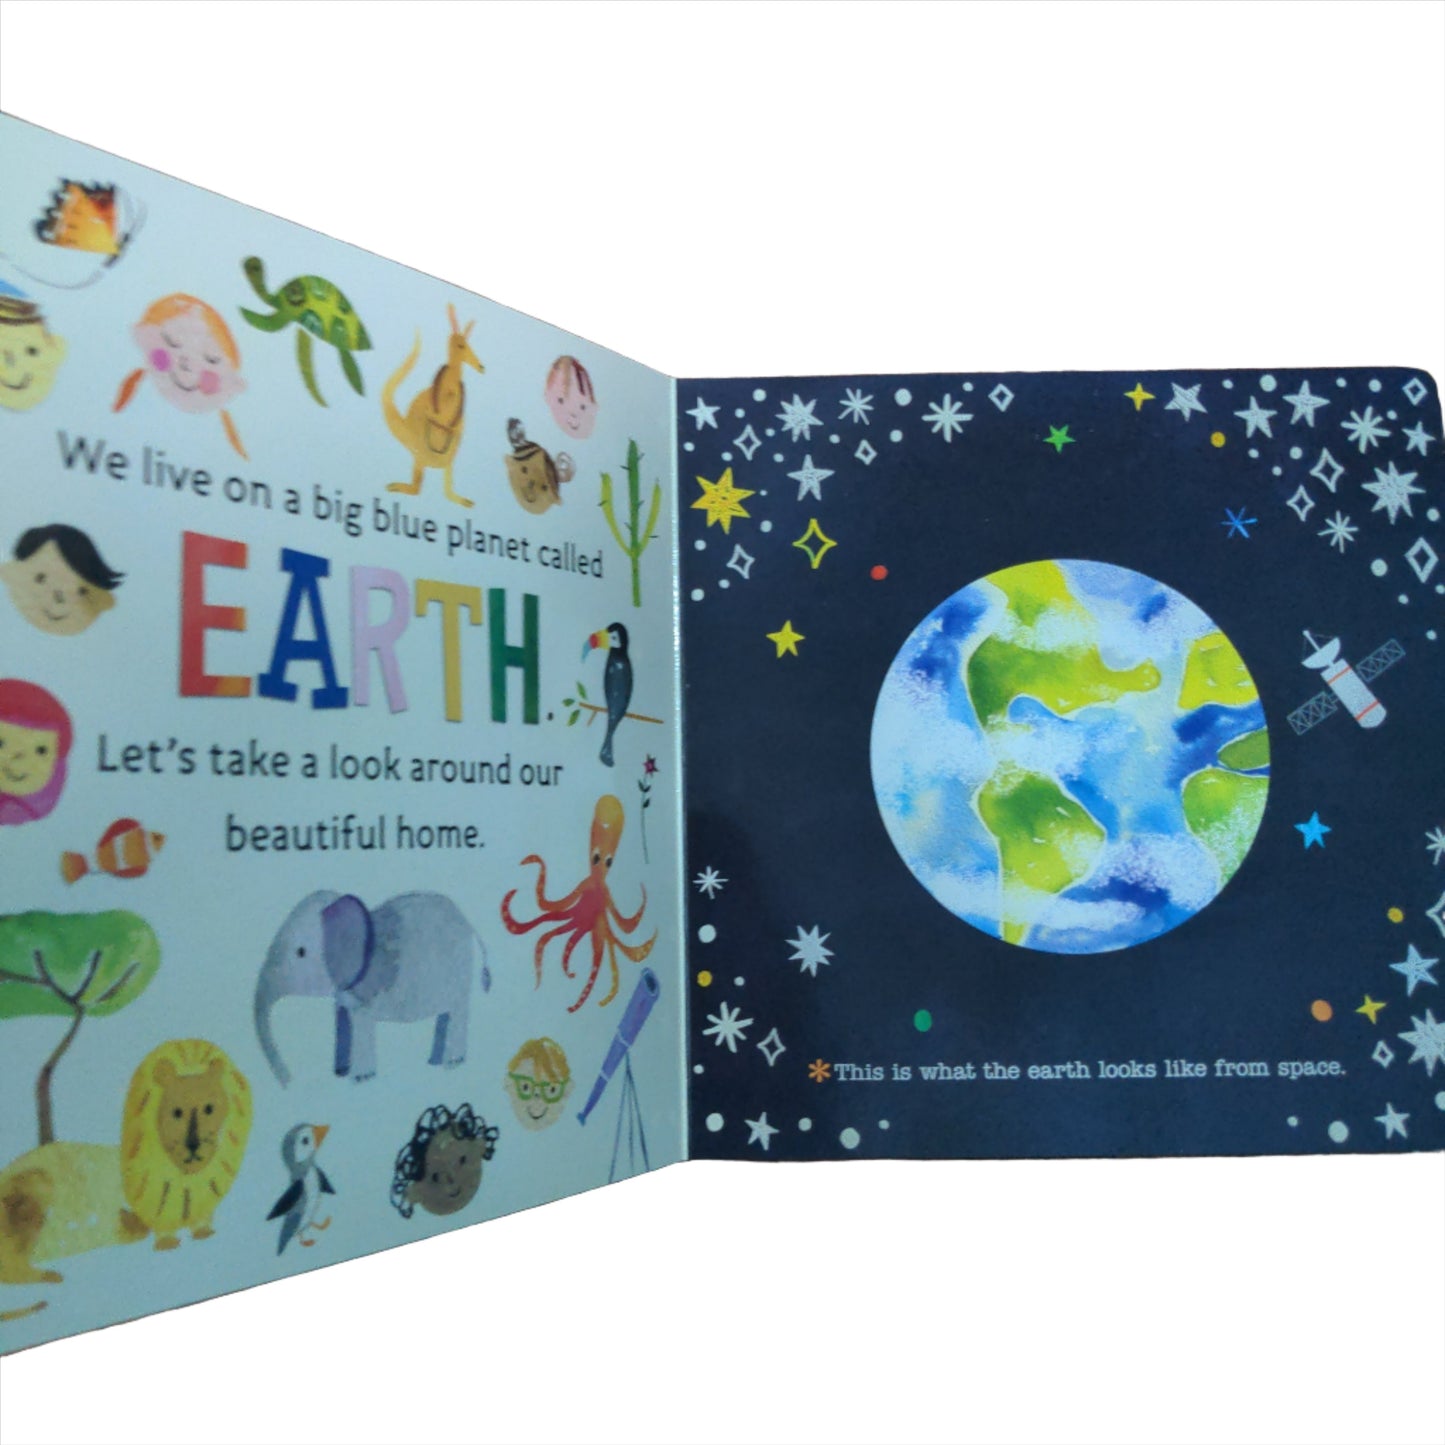 Hello, World! Planet Earth - New Book